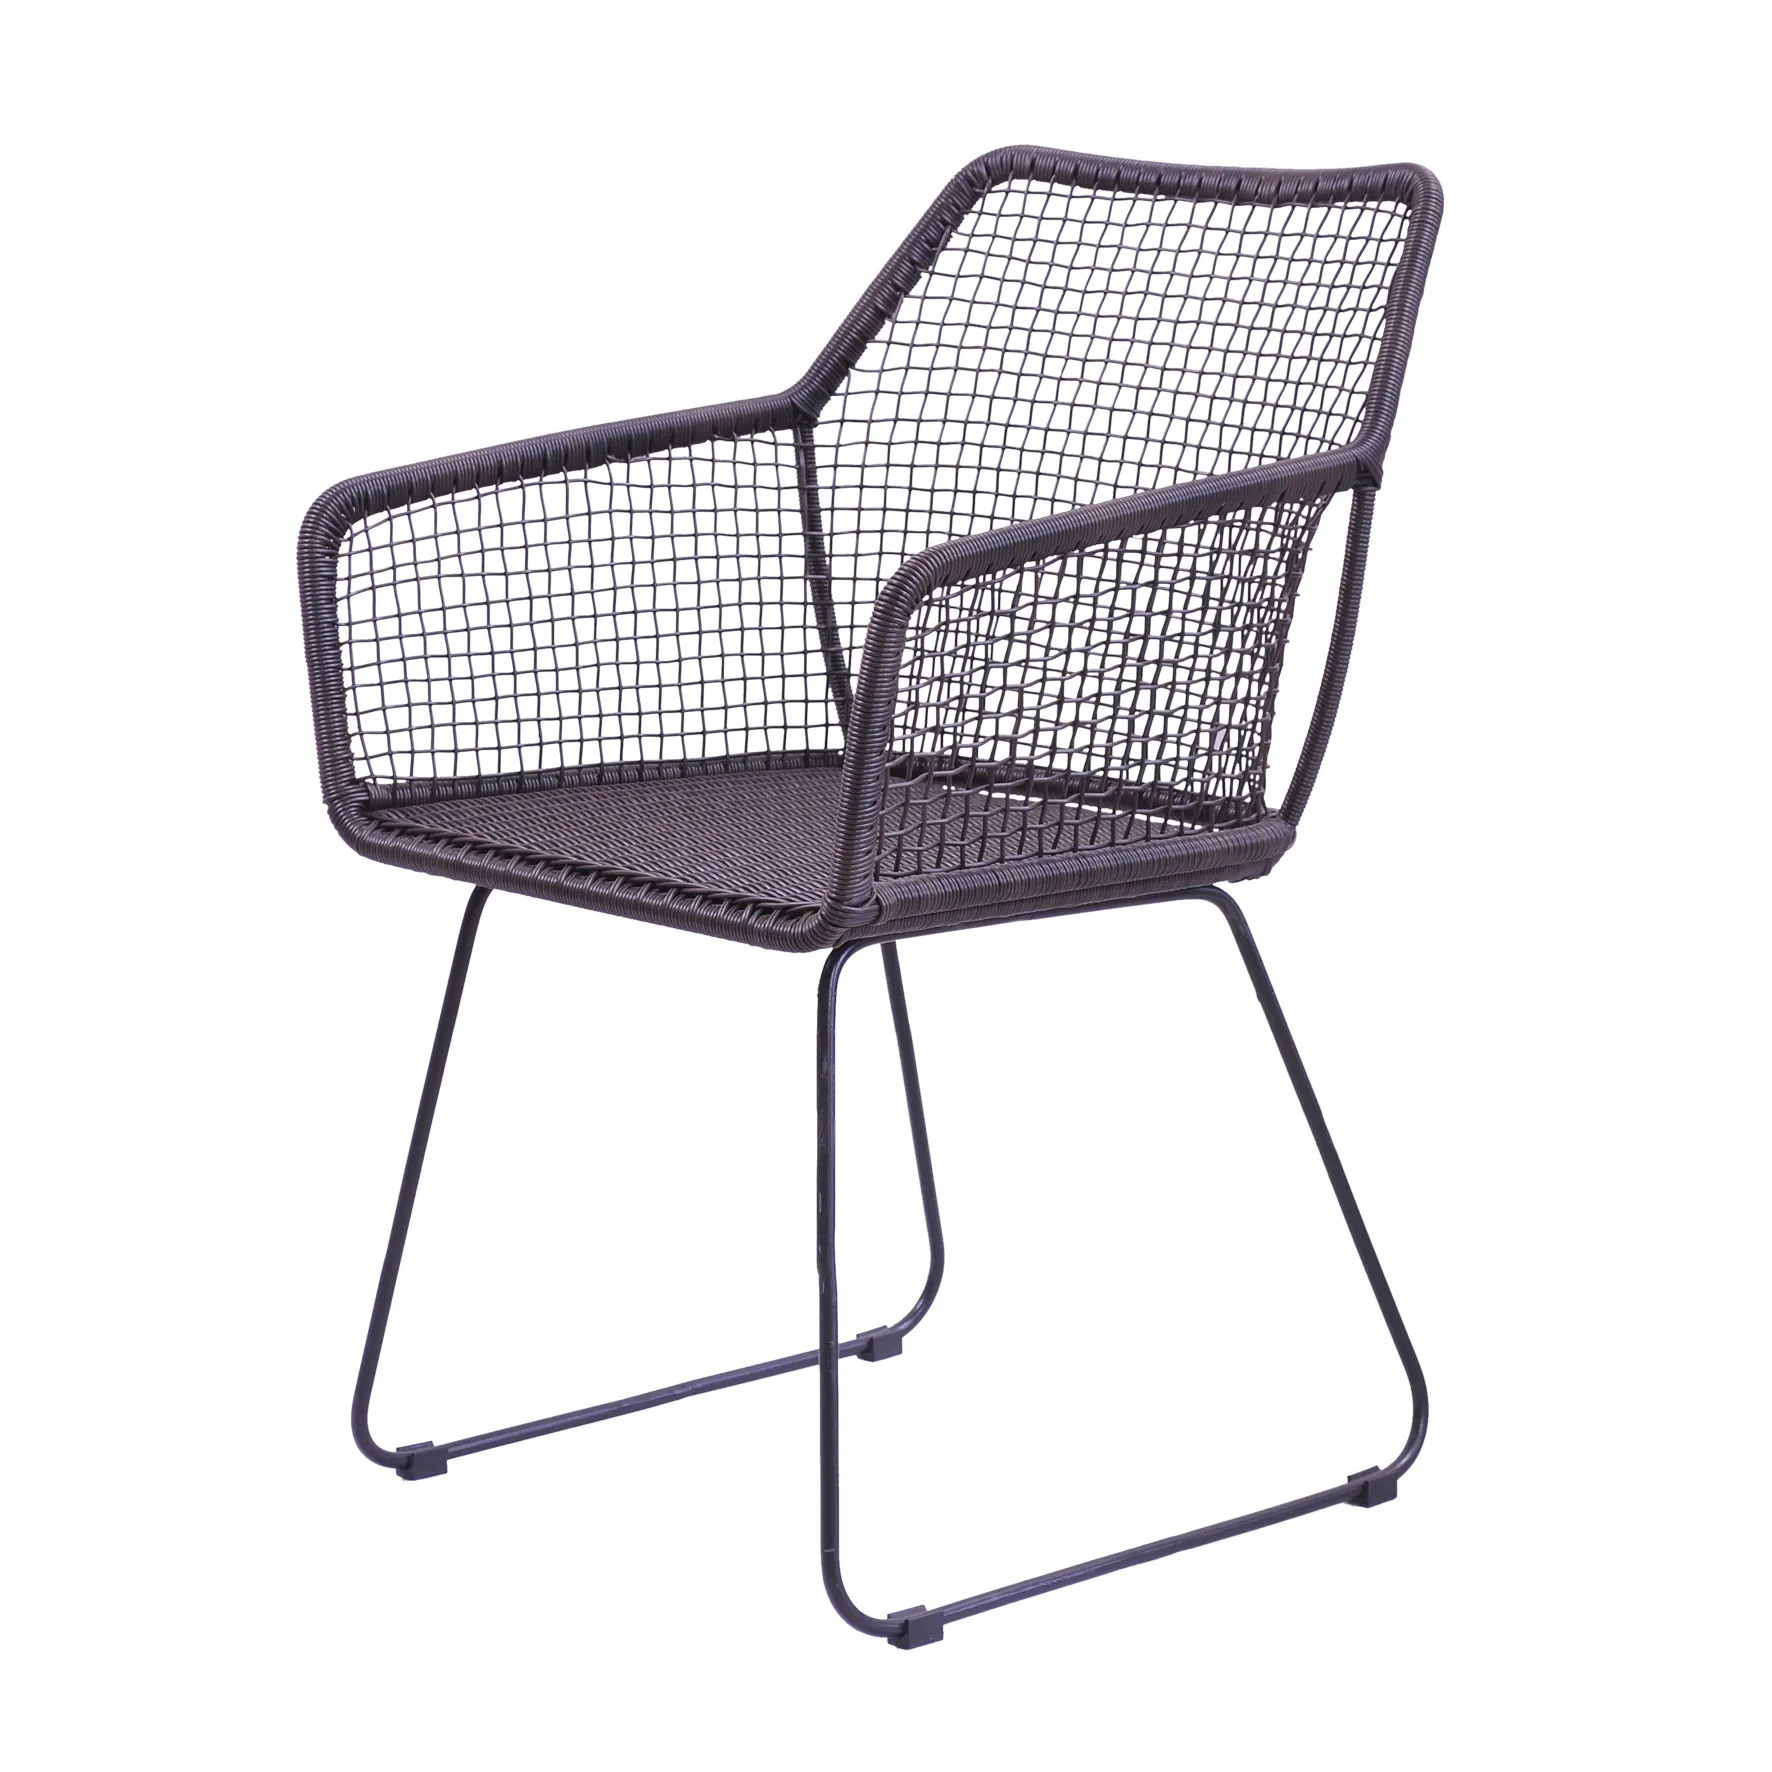 Hochwertiger rustikaler stilvoller Stuhl aus Rattan-Synthetik Mit einfachem, elegantem, modernem Design aus Indonesien